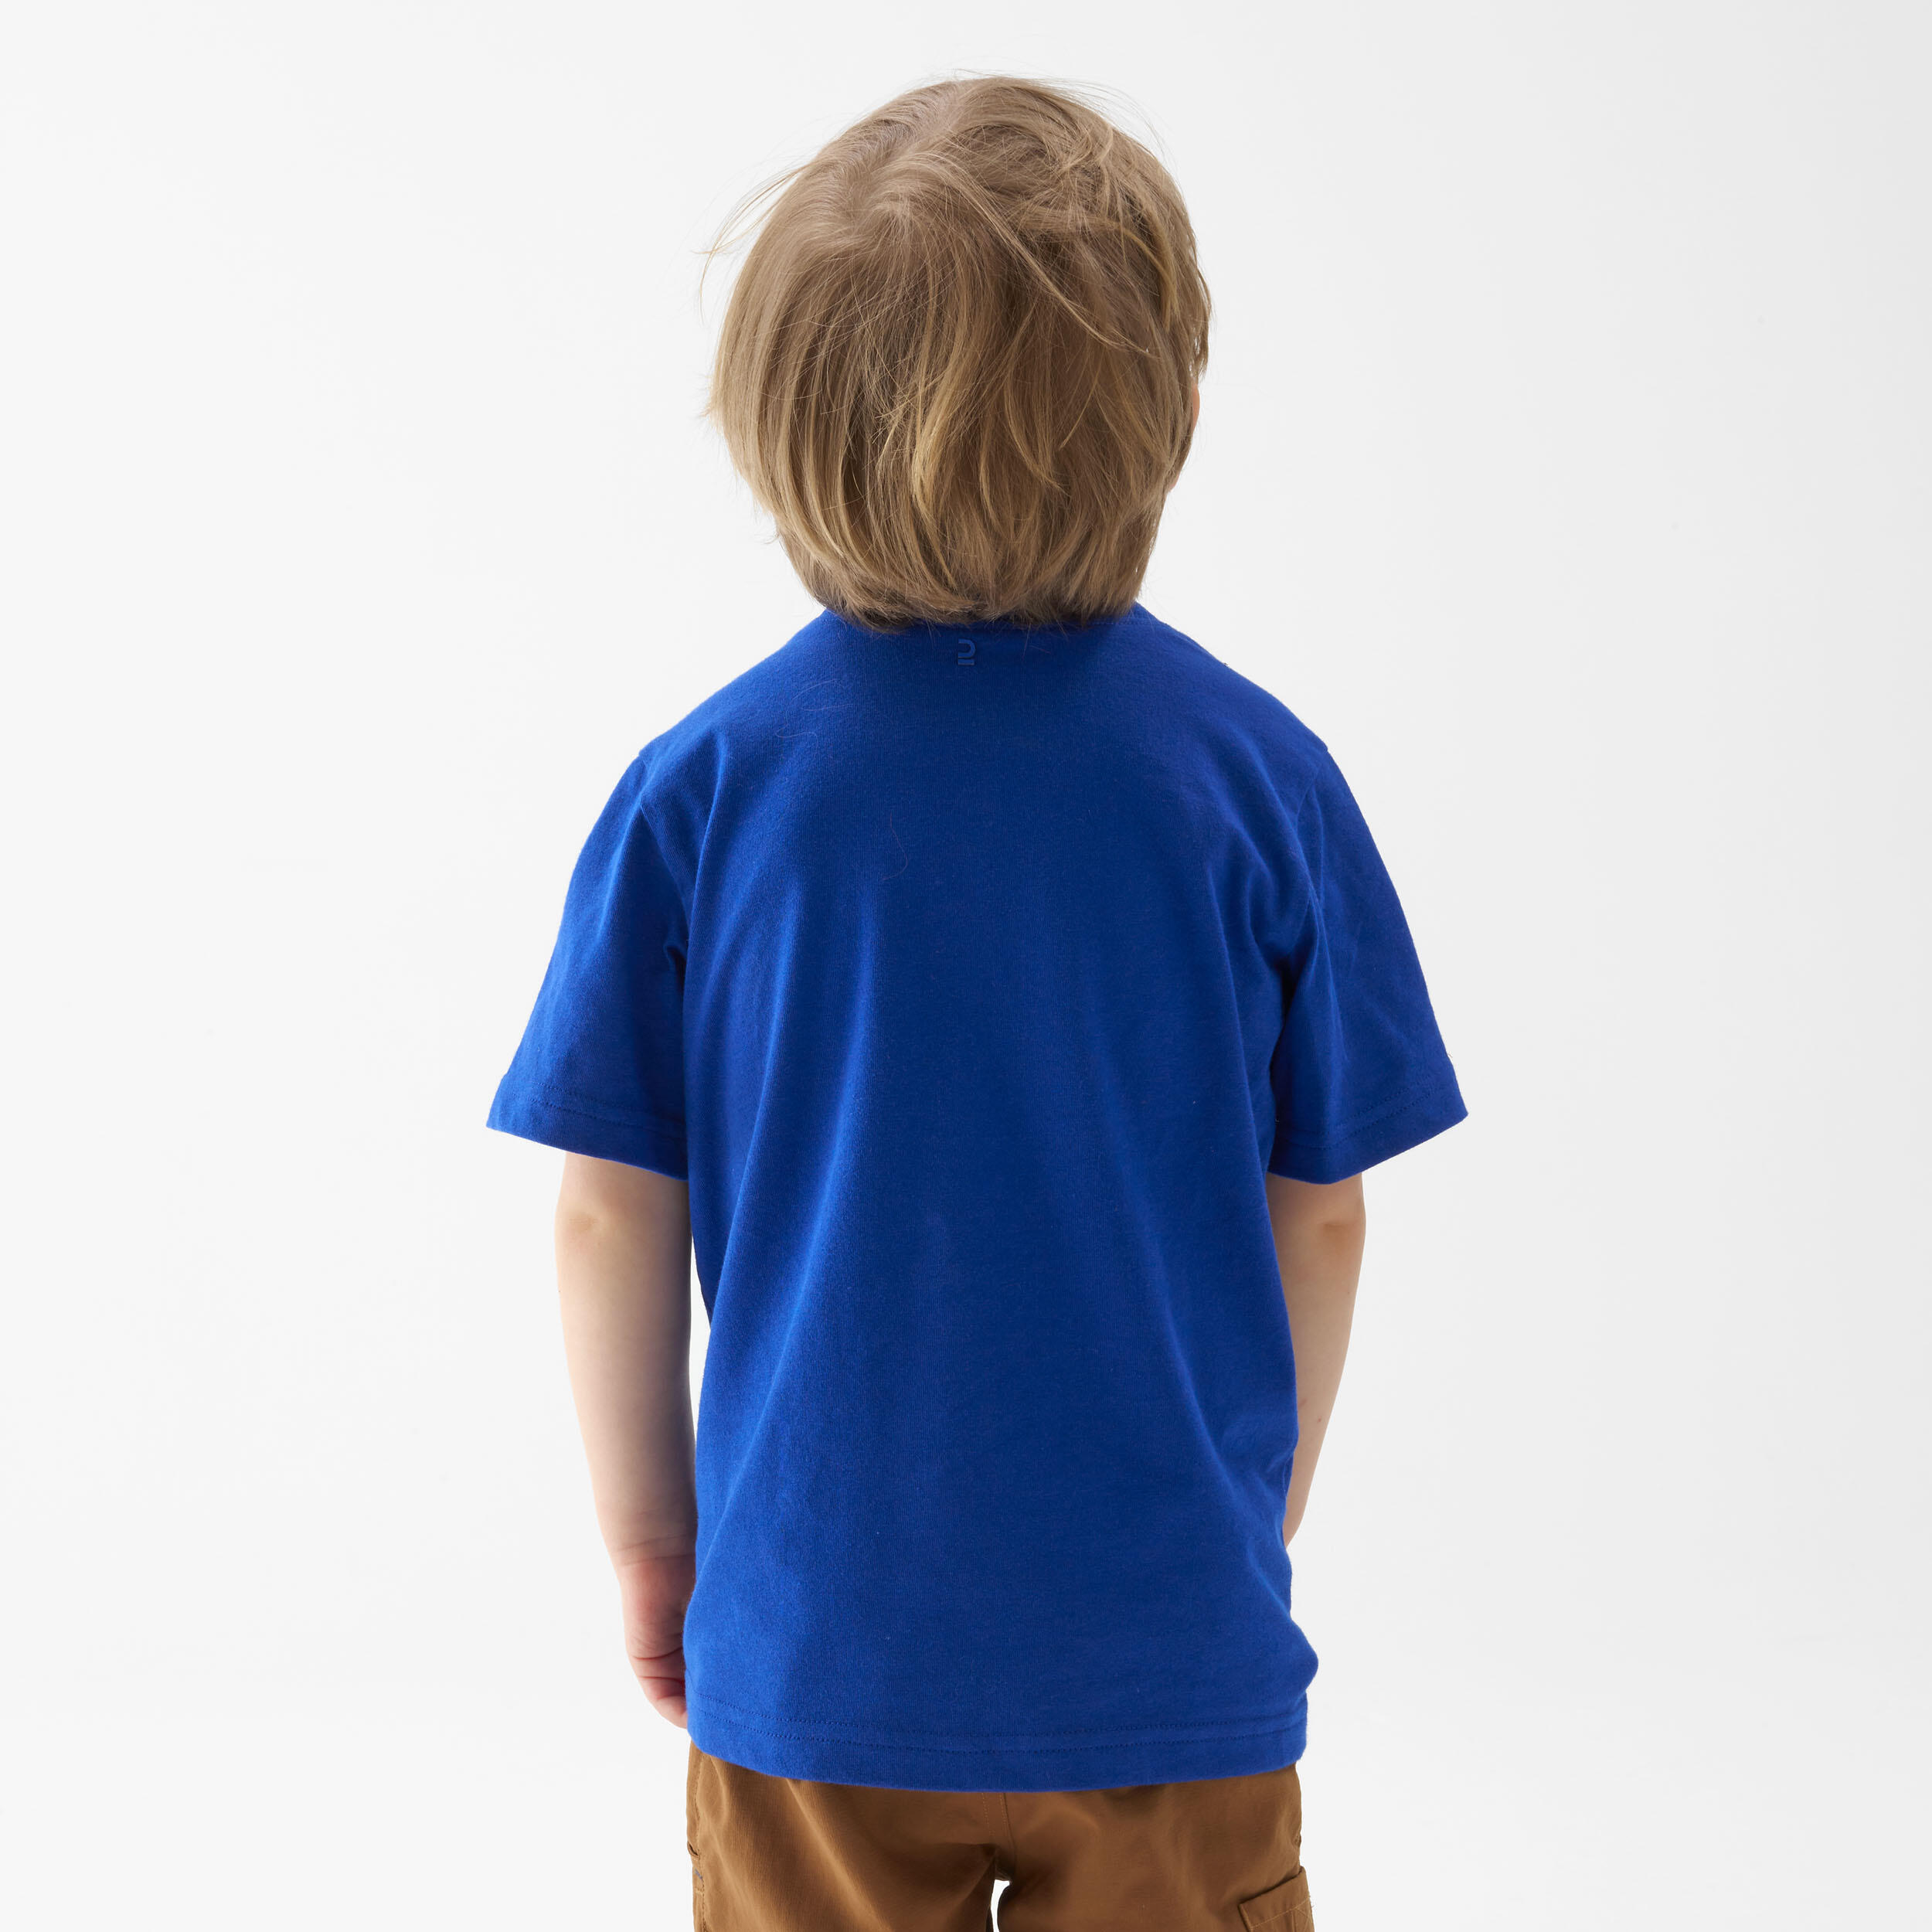 Child's hiking T-shirt - MH100 blue phosphor - 2-6 years 4/4